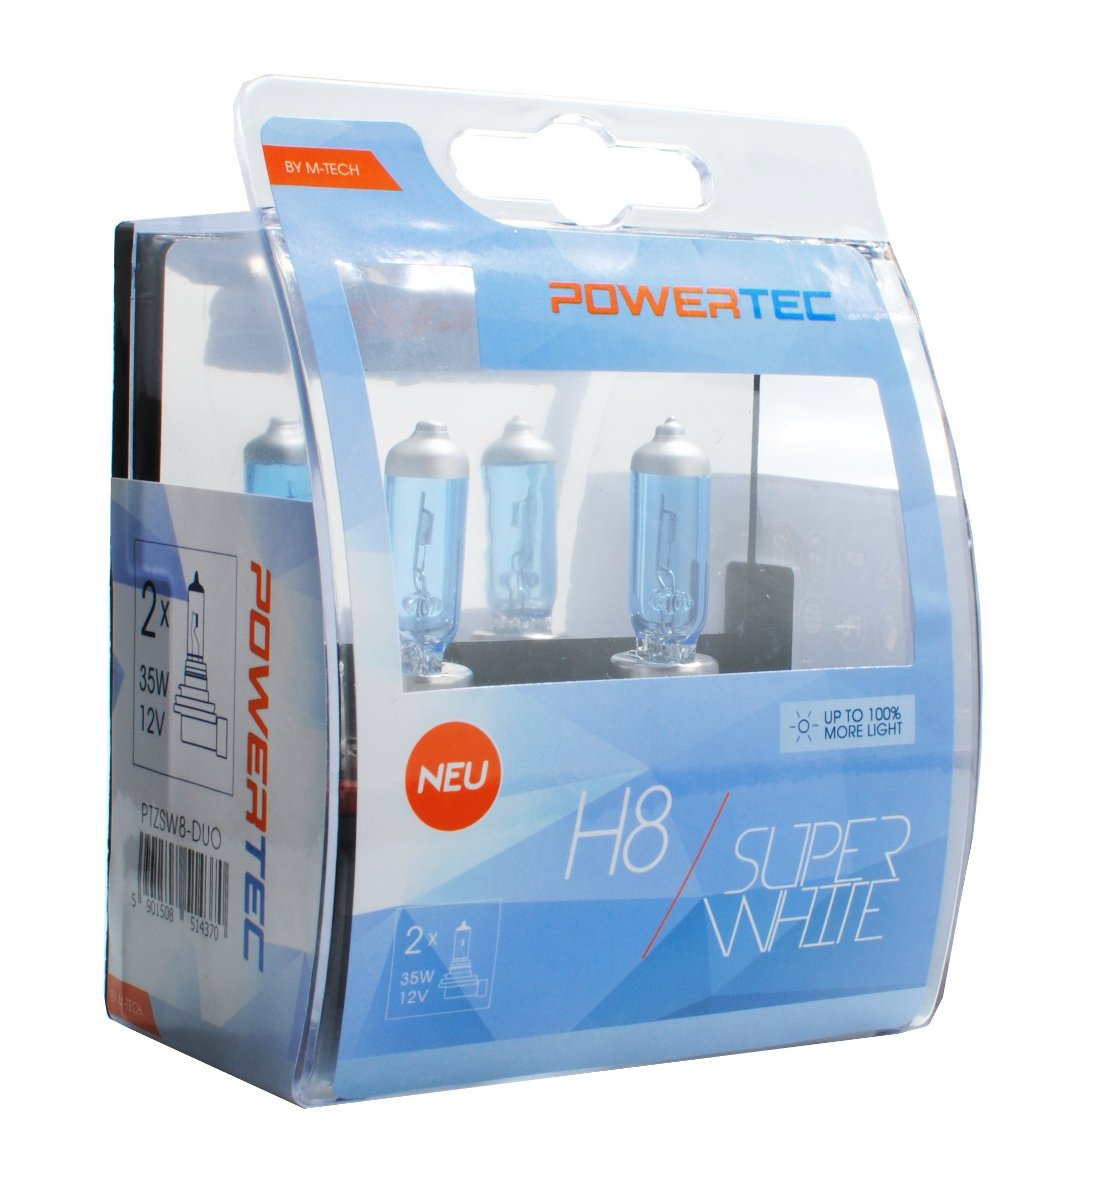 M-Tech Tech ptzsw8 Duo Powertec Super White H8 12 V 35 W PTZSW8-DUO